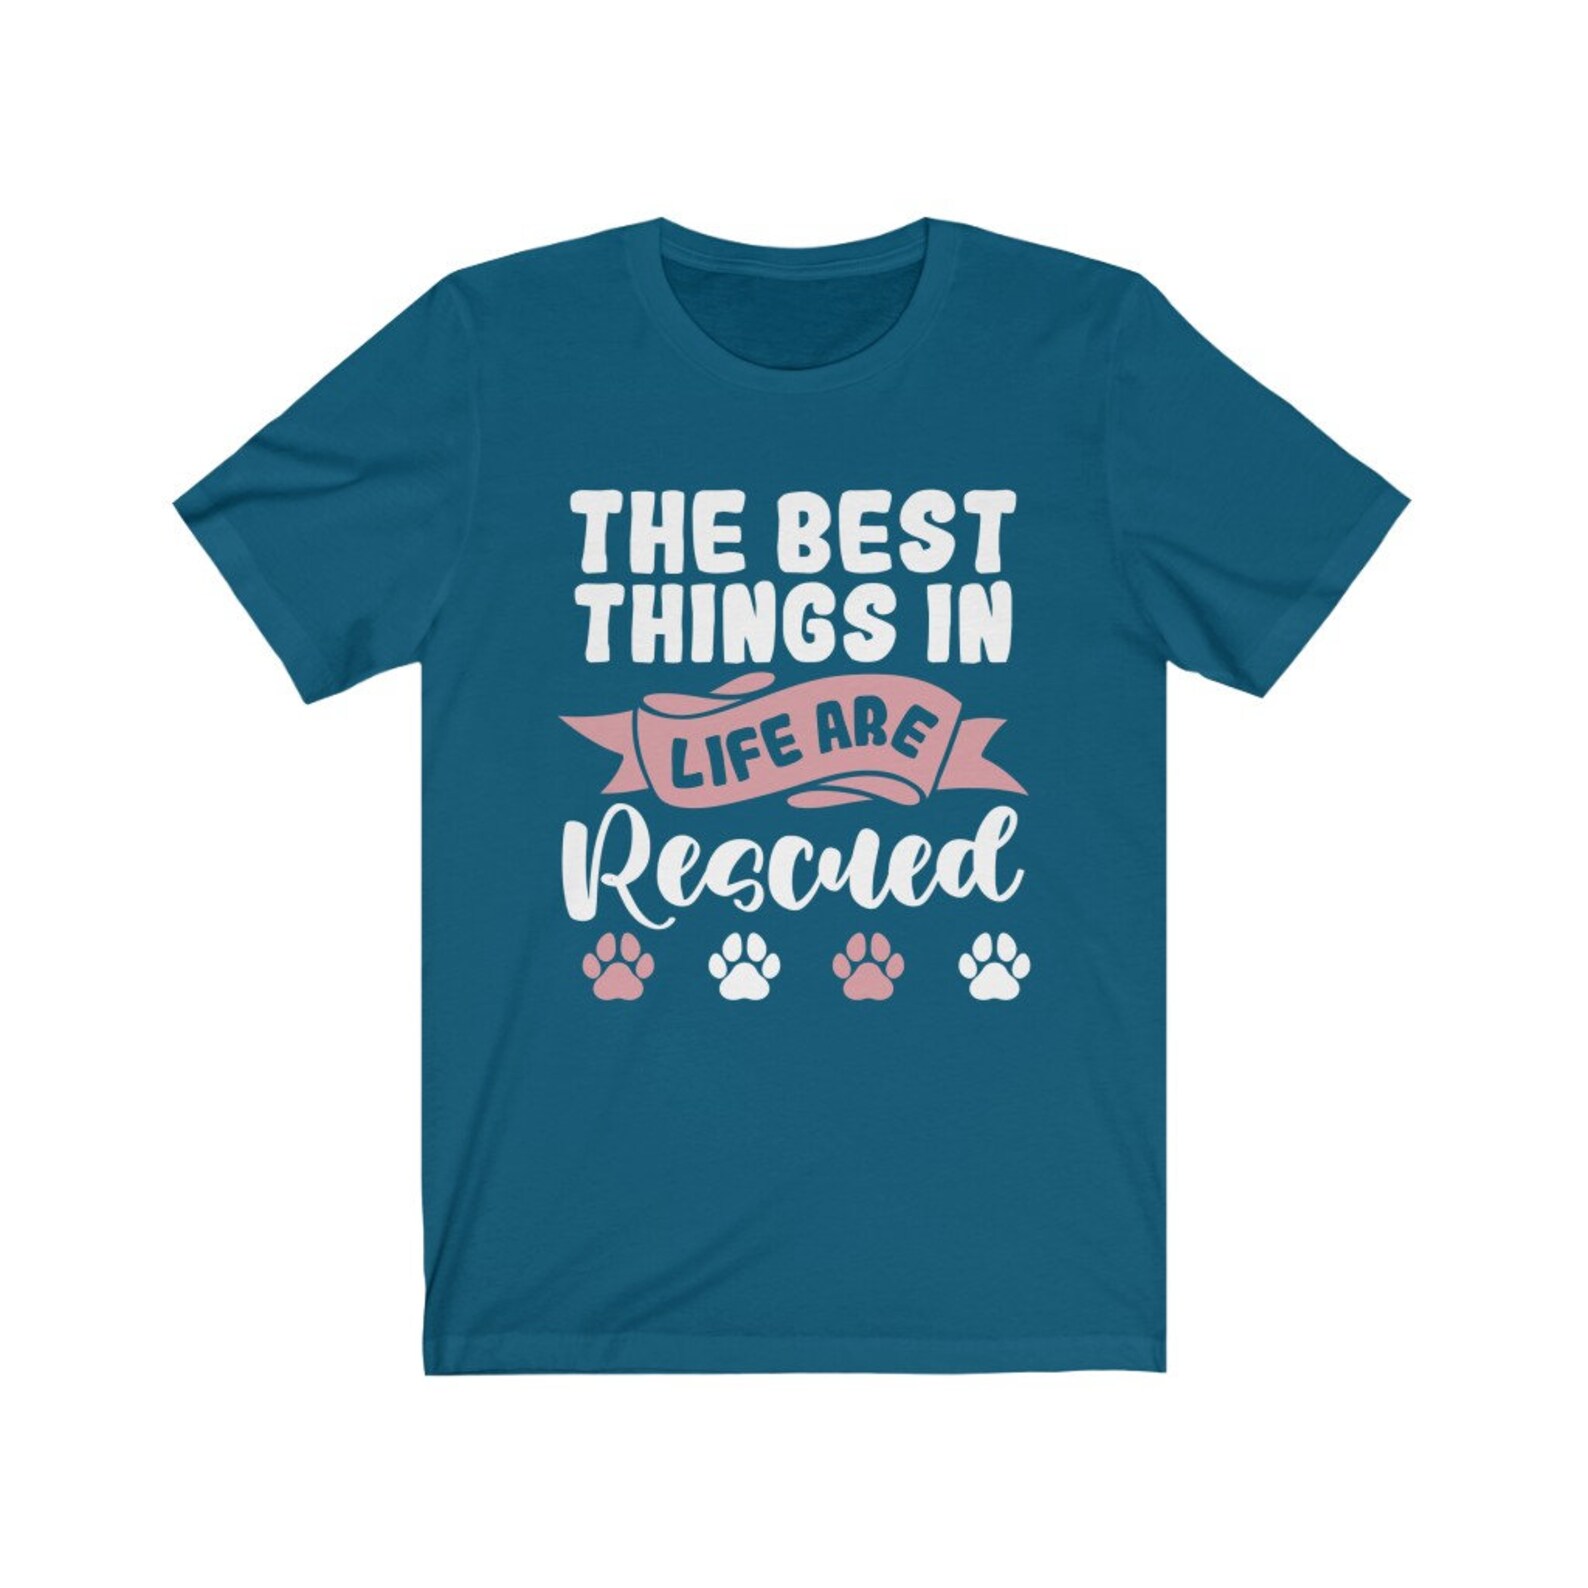 Rescue Animal Shirt Adopted Dog Rescue Animal Shelter | Etsy